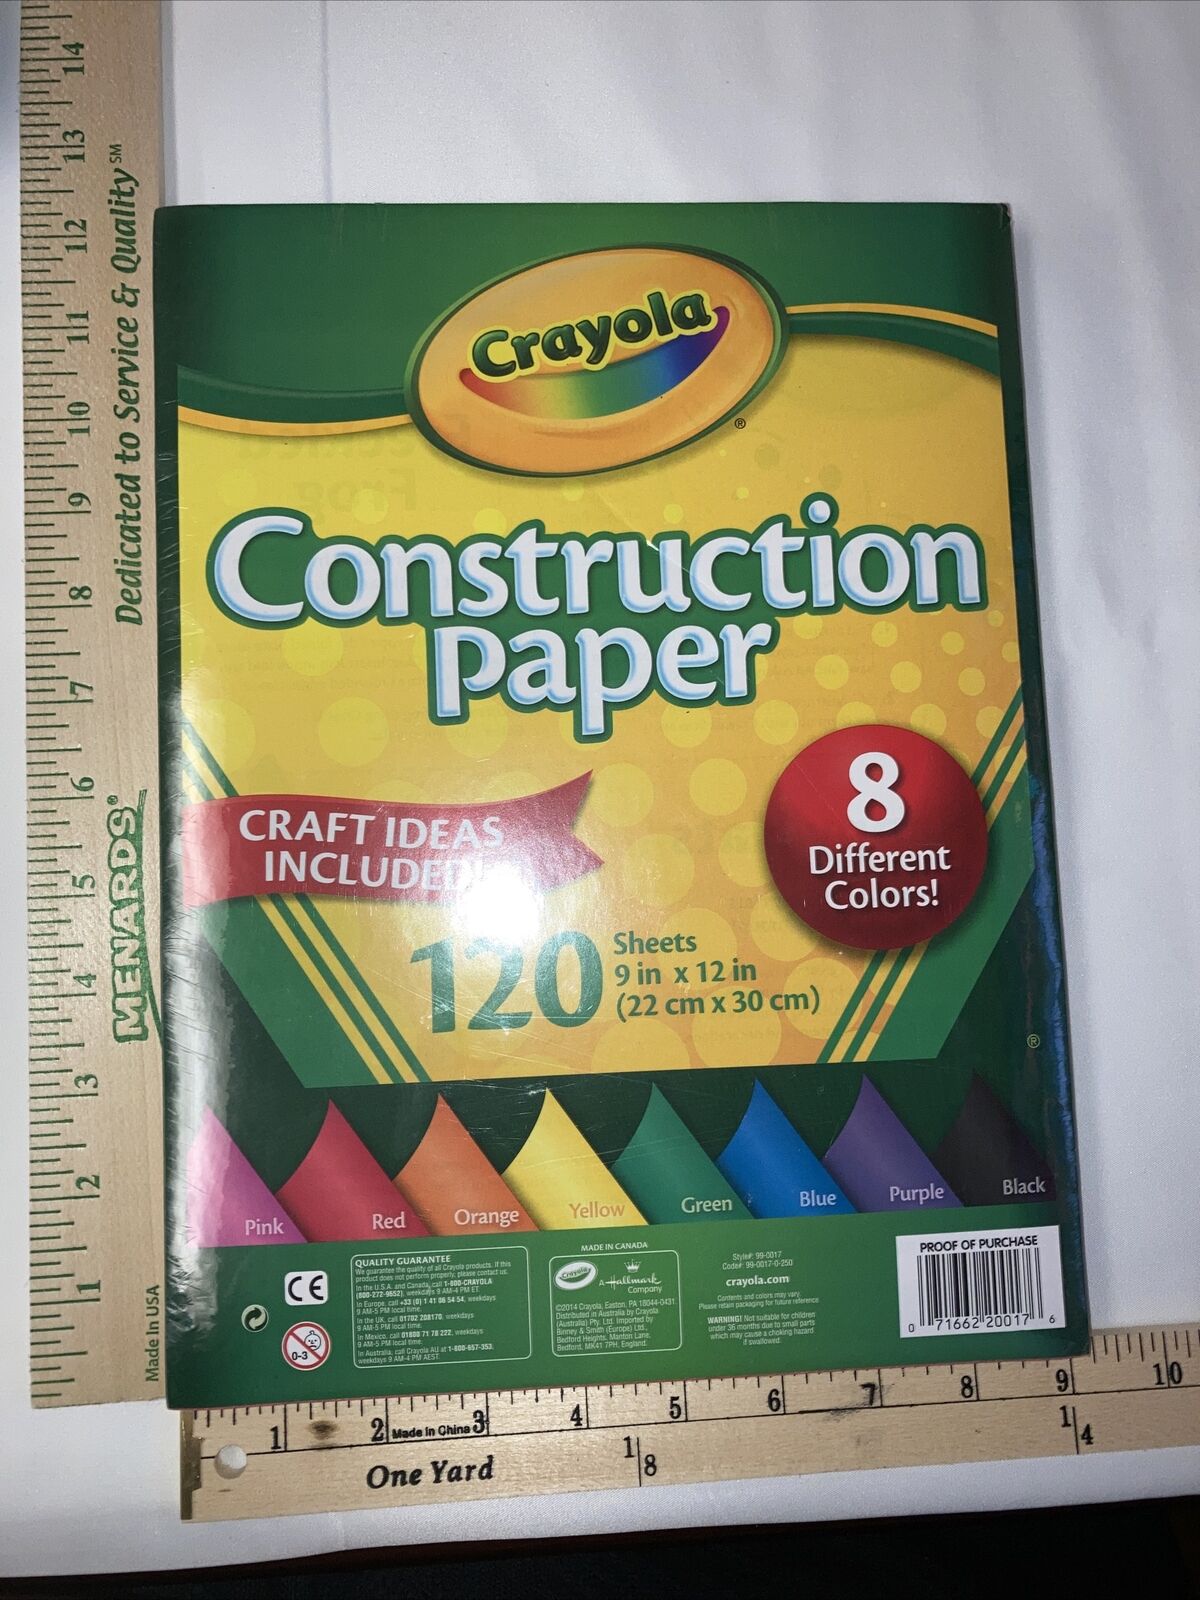 Crayola Construction Paper 9x12 (22cm x 30cm) 720 Sheets 12